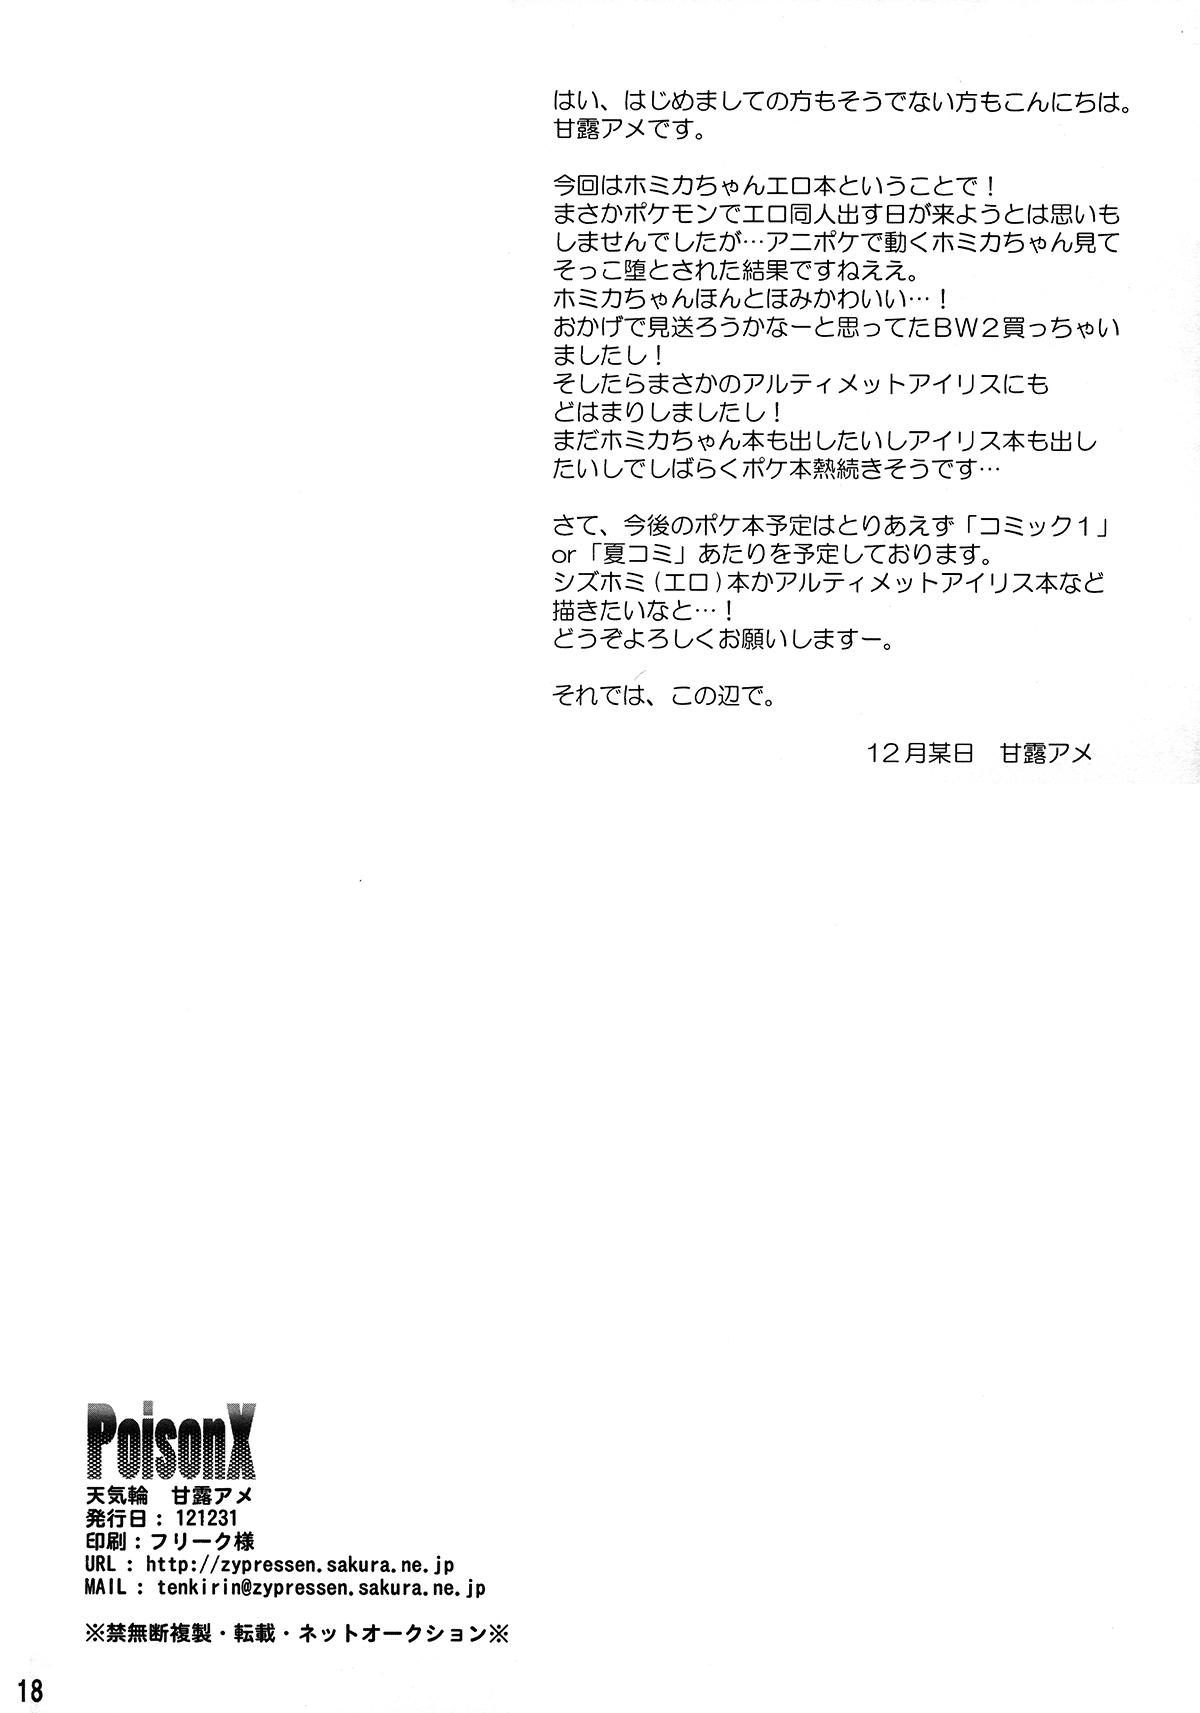 Web PoisonX - Pokemon POV - Page 16